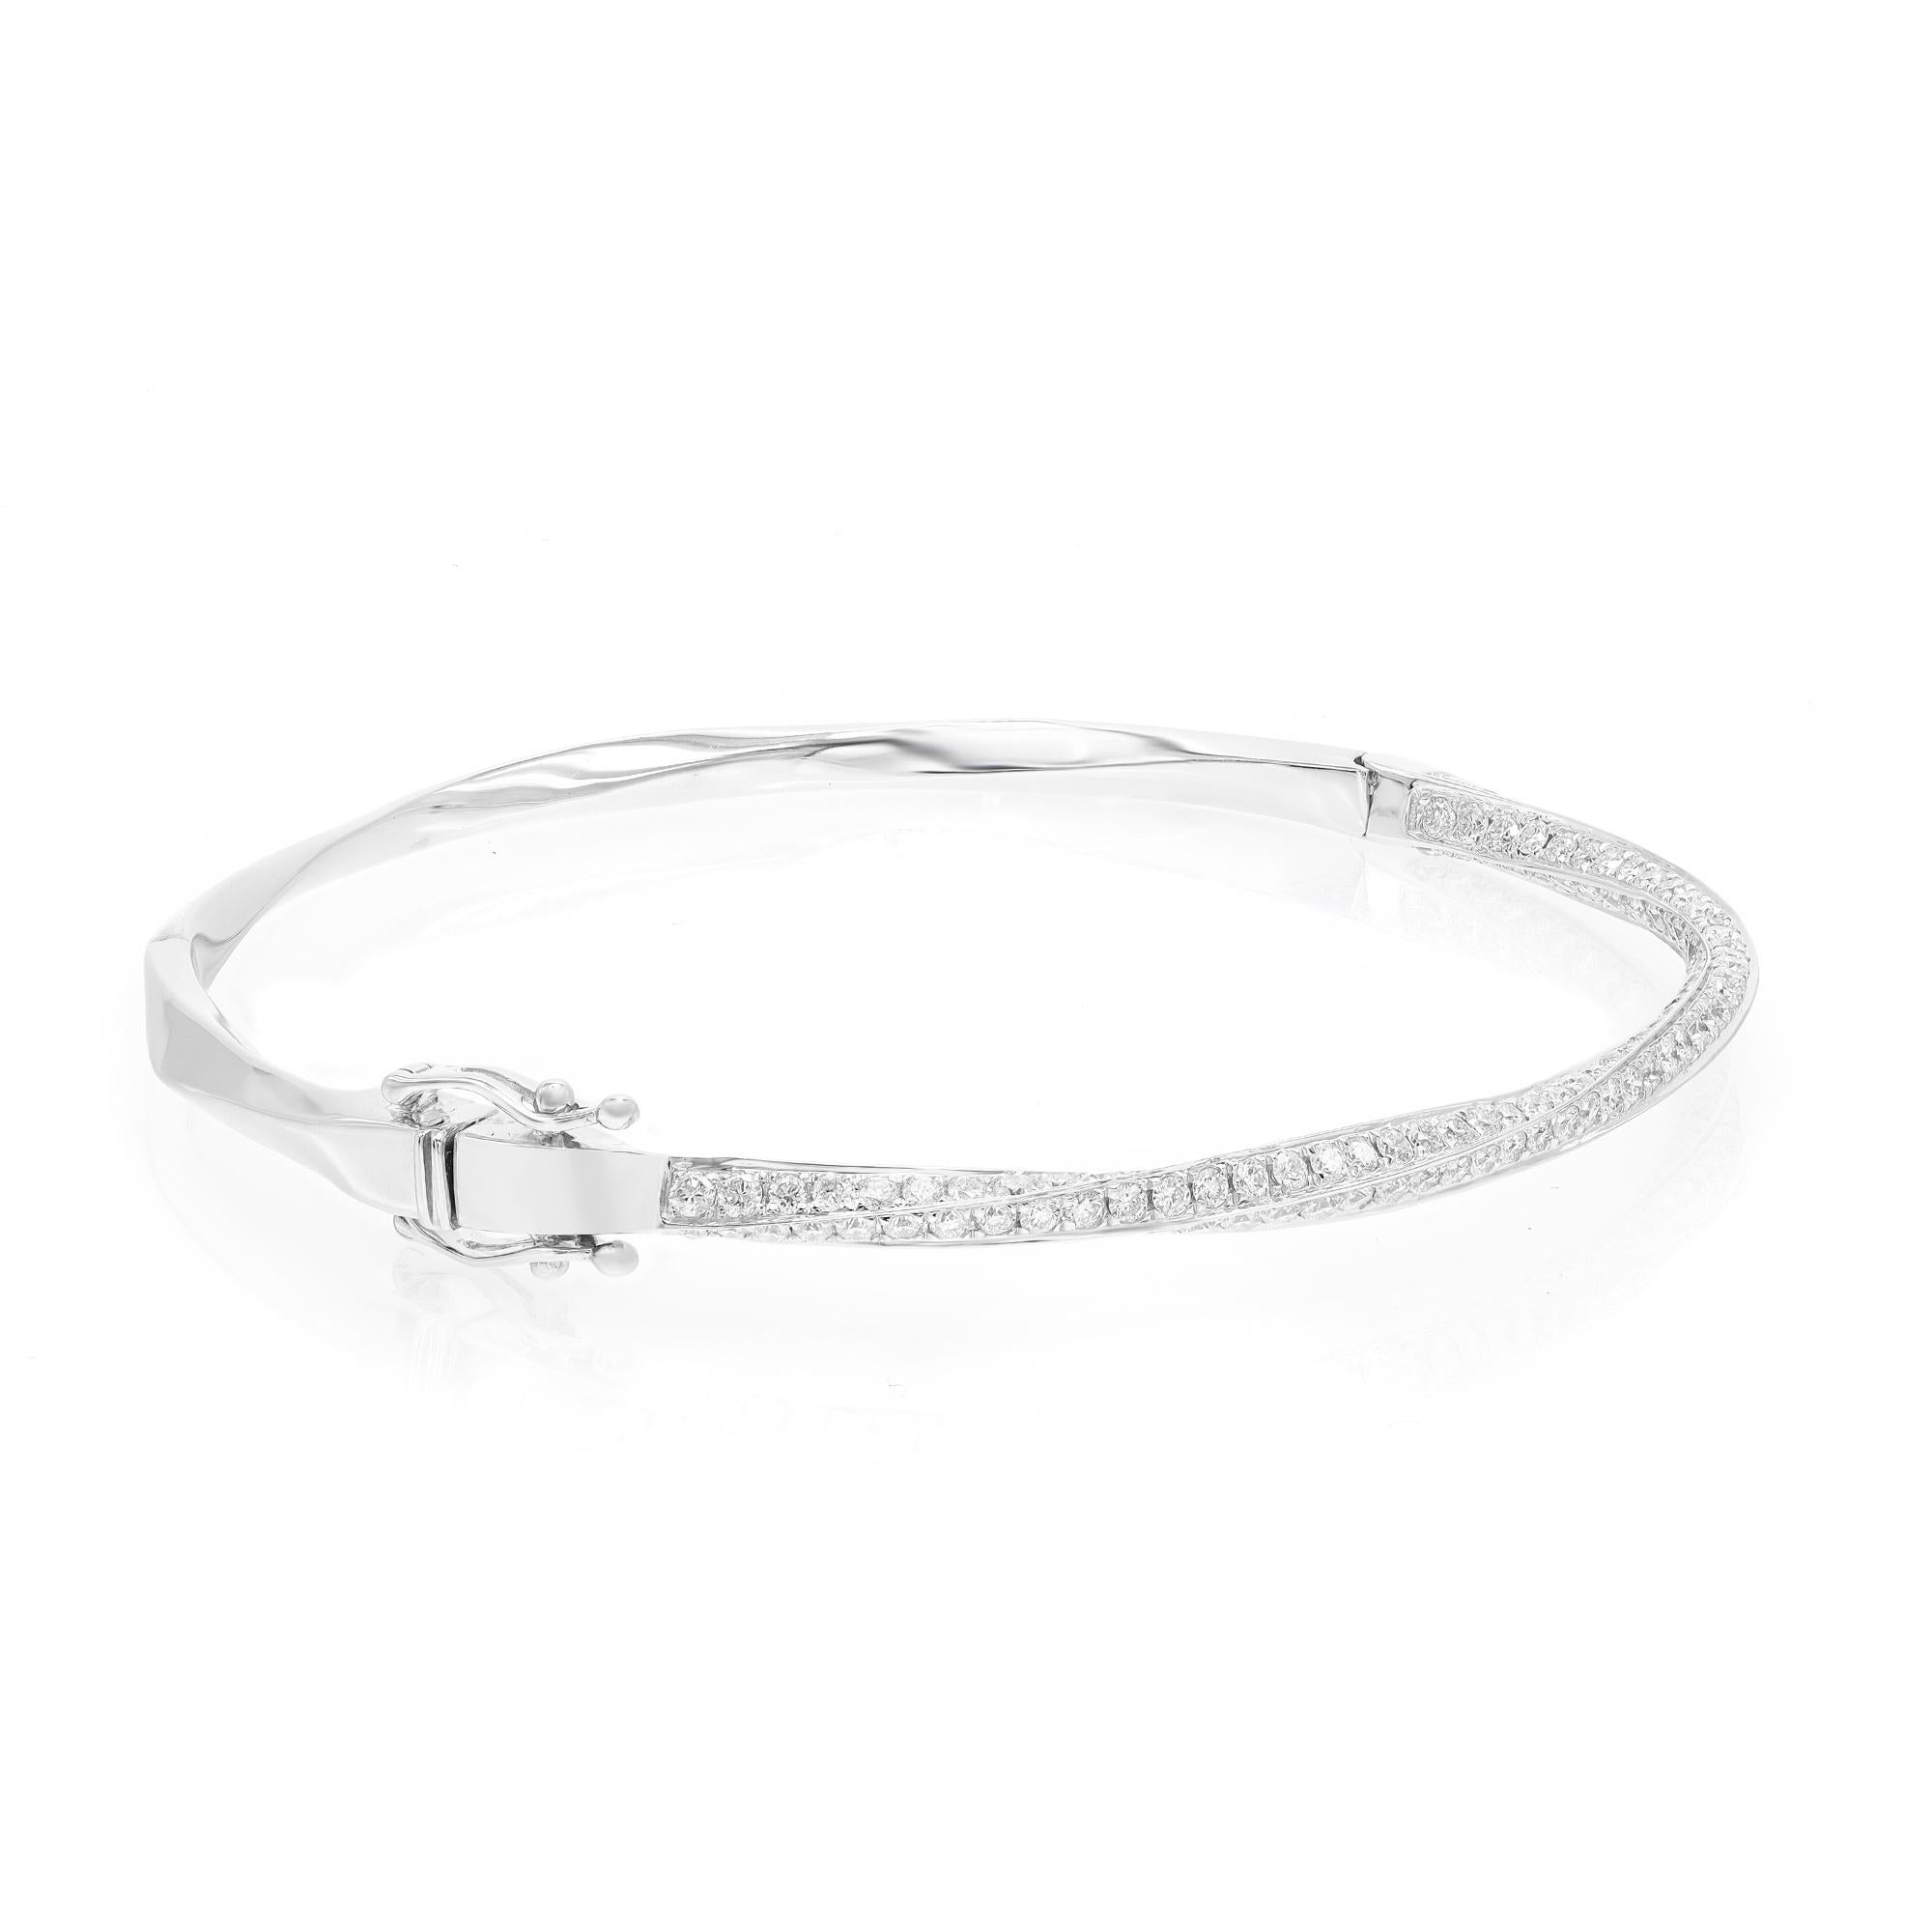 Modern Rachel Koen Pave Set Round Cut Diamond Bangle Bracelet 18K White Gold 2.09Cttw For Sale